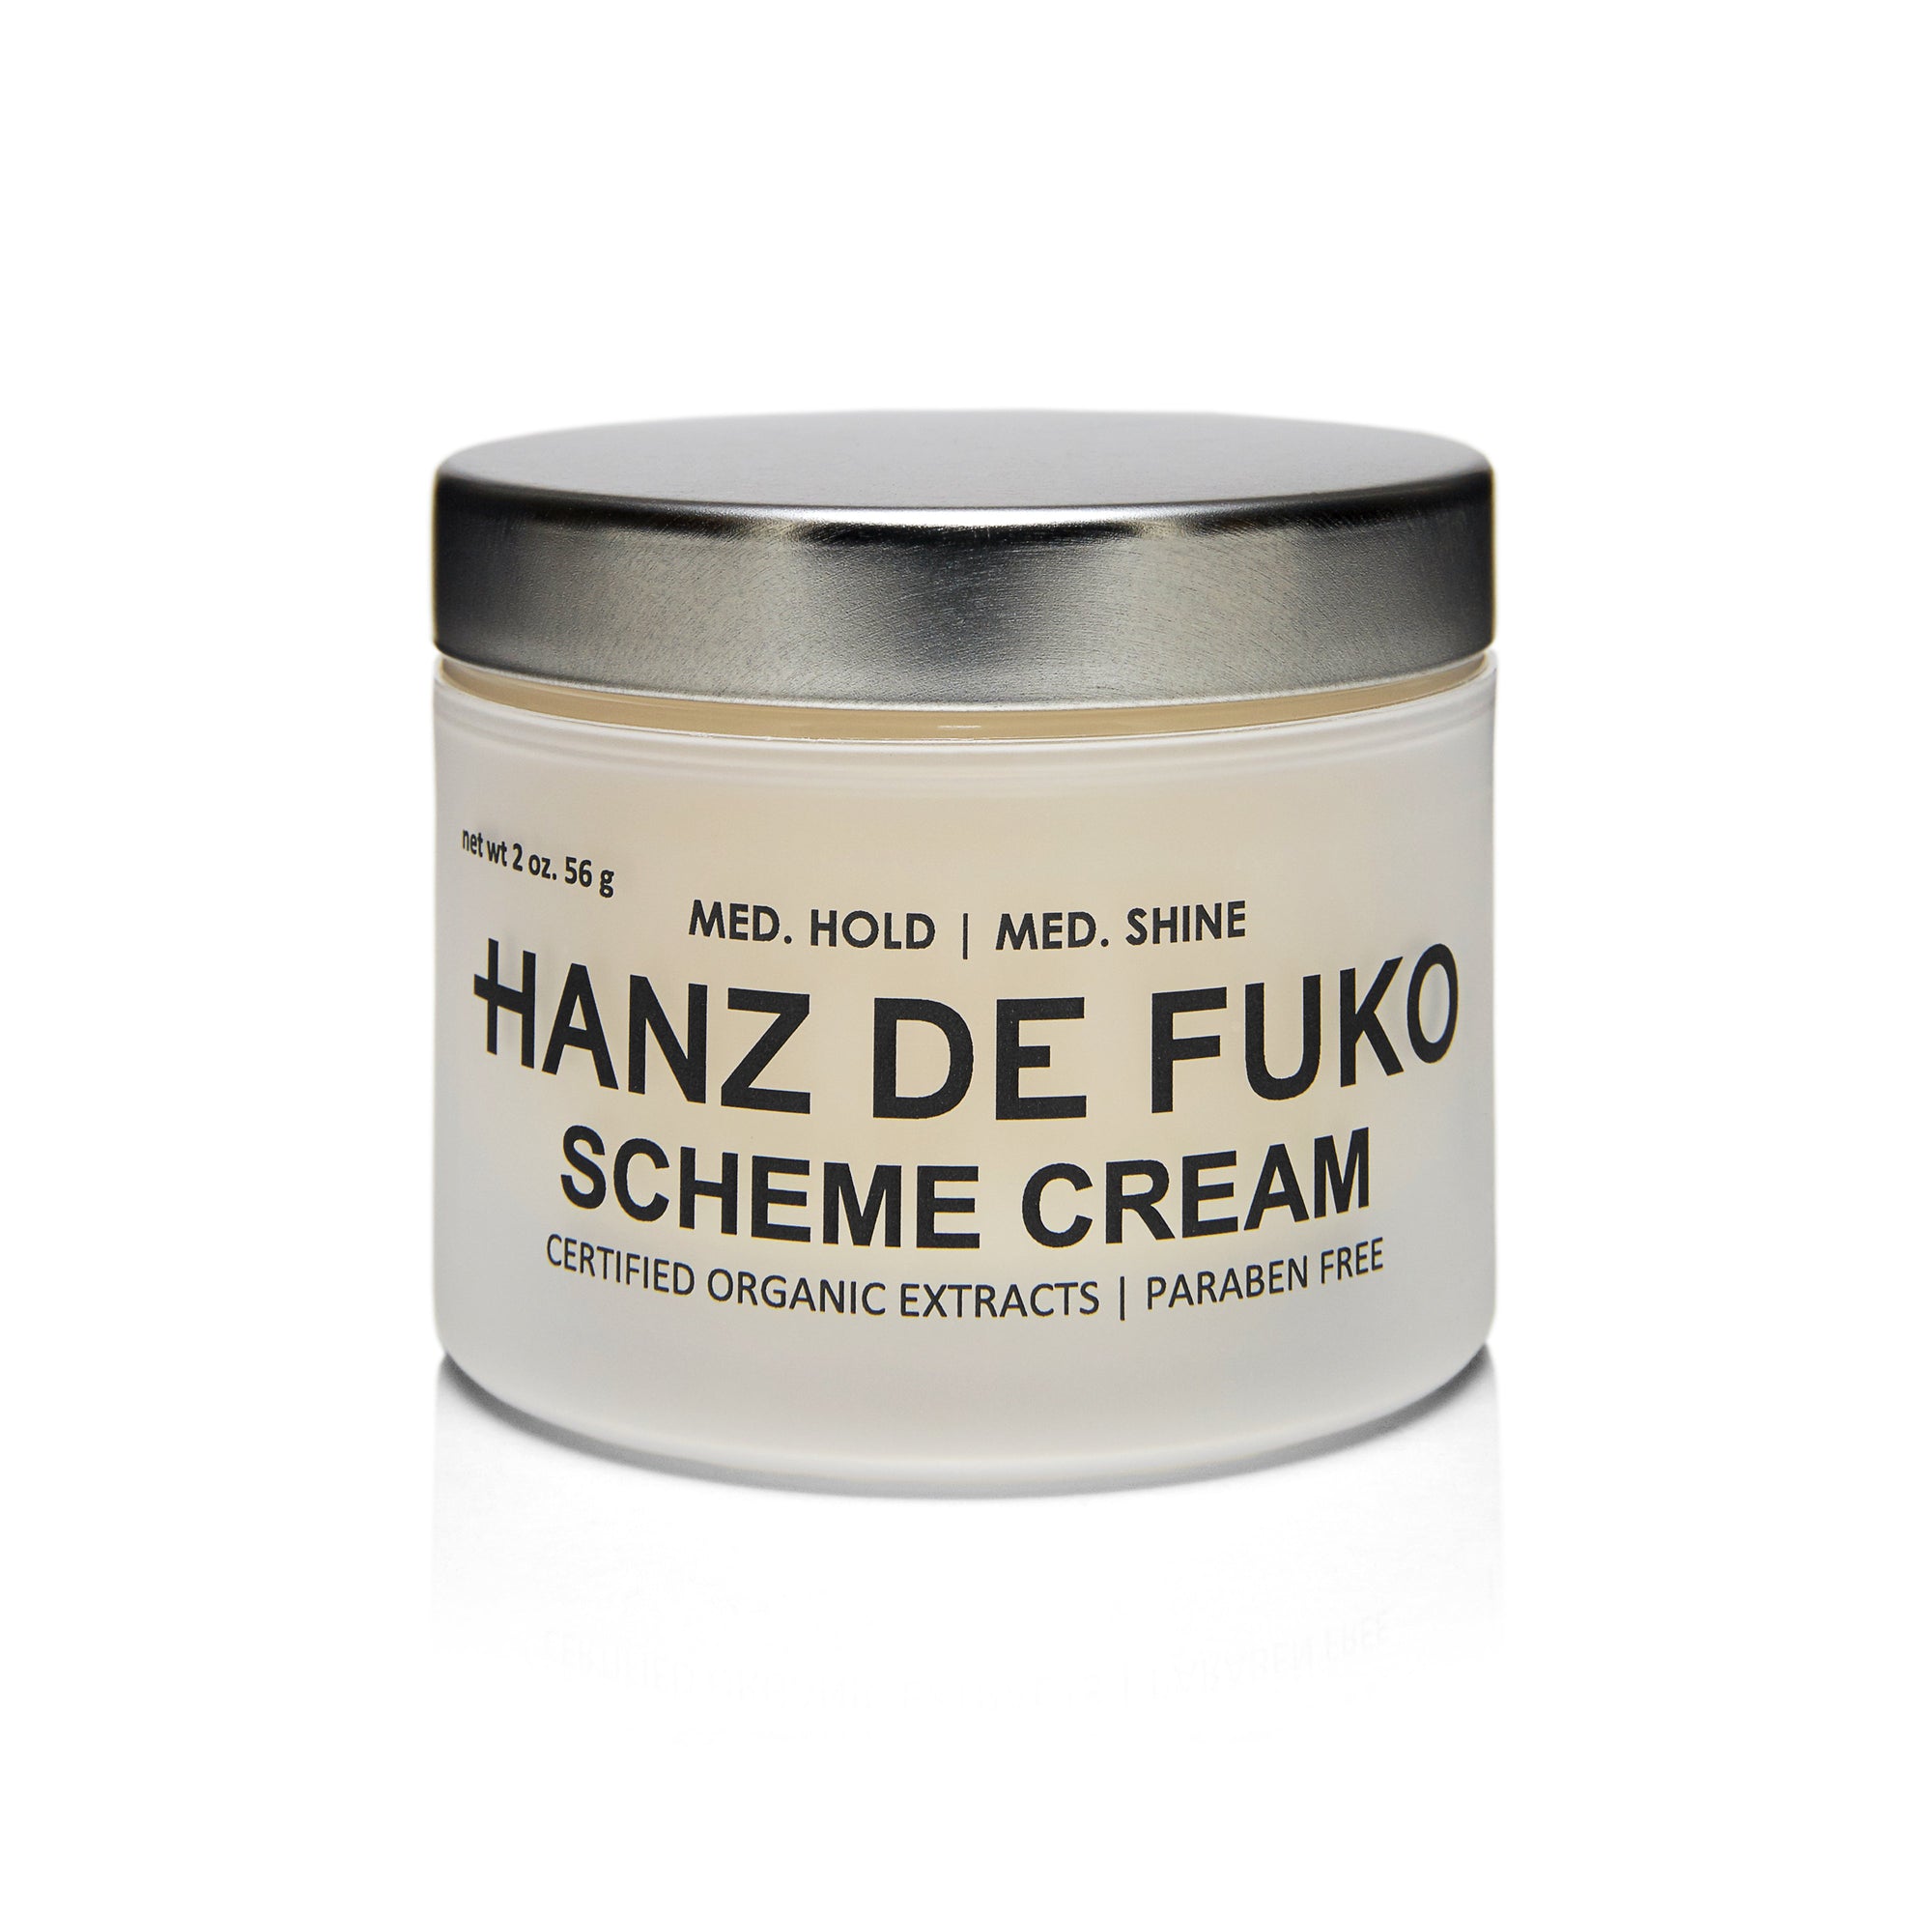 Hanz De Fuko - Scheme Cream